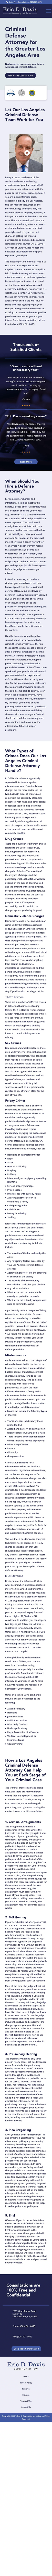 Anaheim Criminal Defense Attorney - Law Offices of Kory Mathewson - Anaheim CA Lawyers